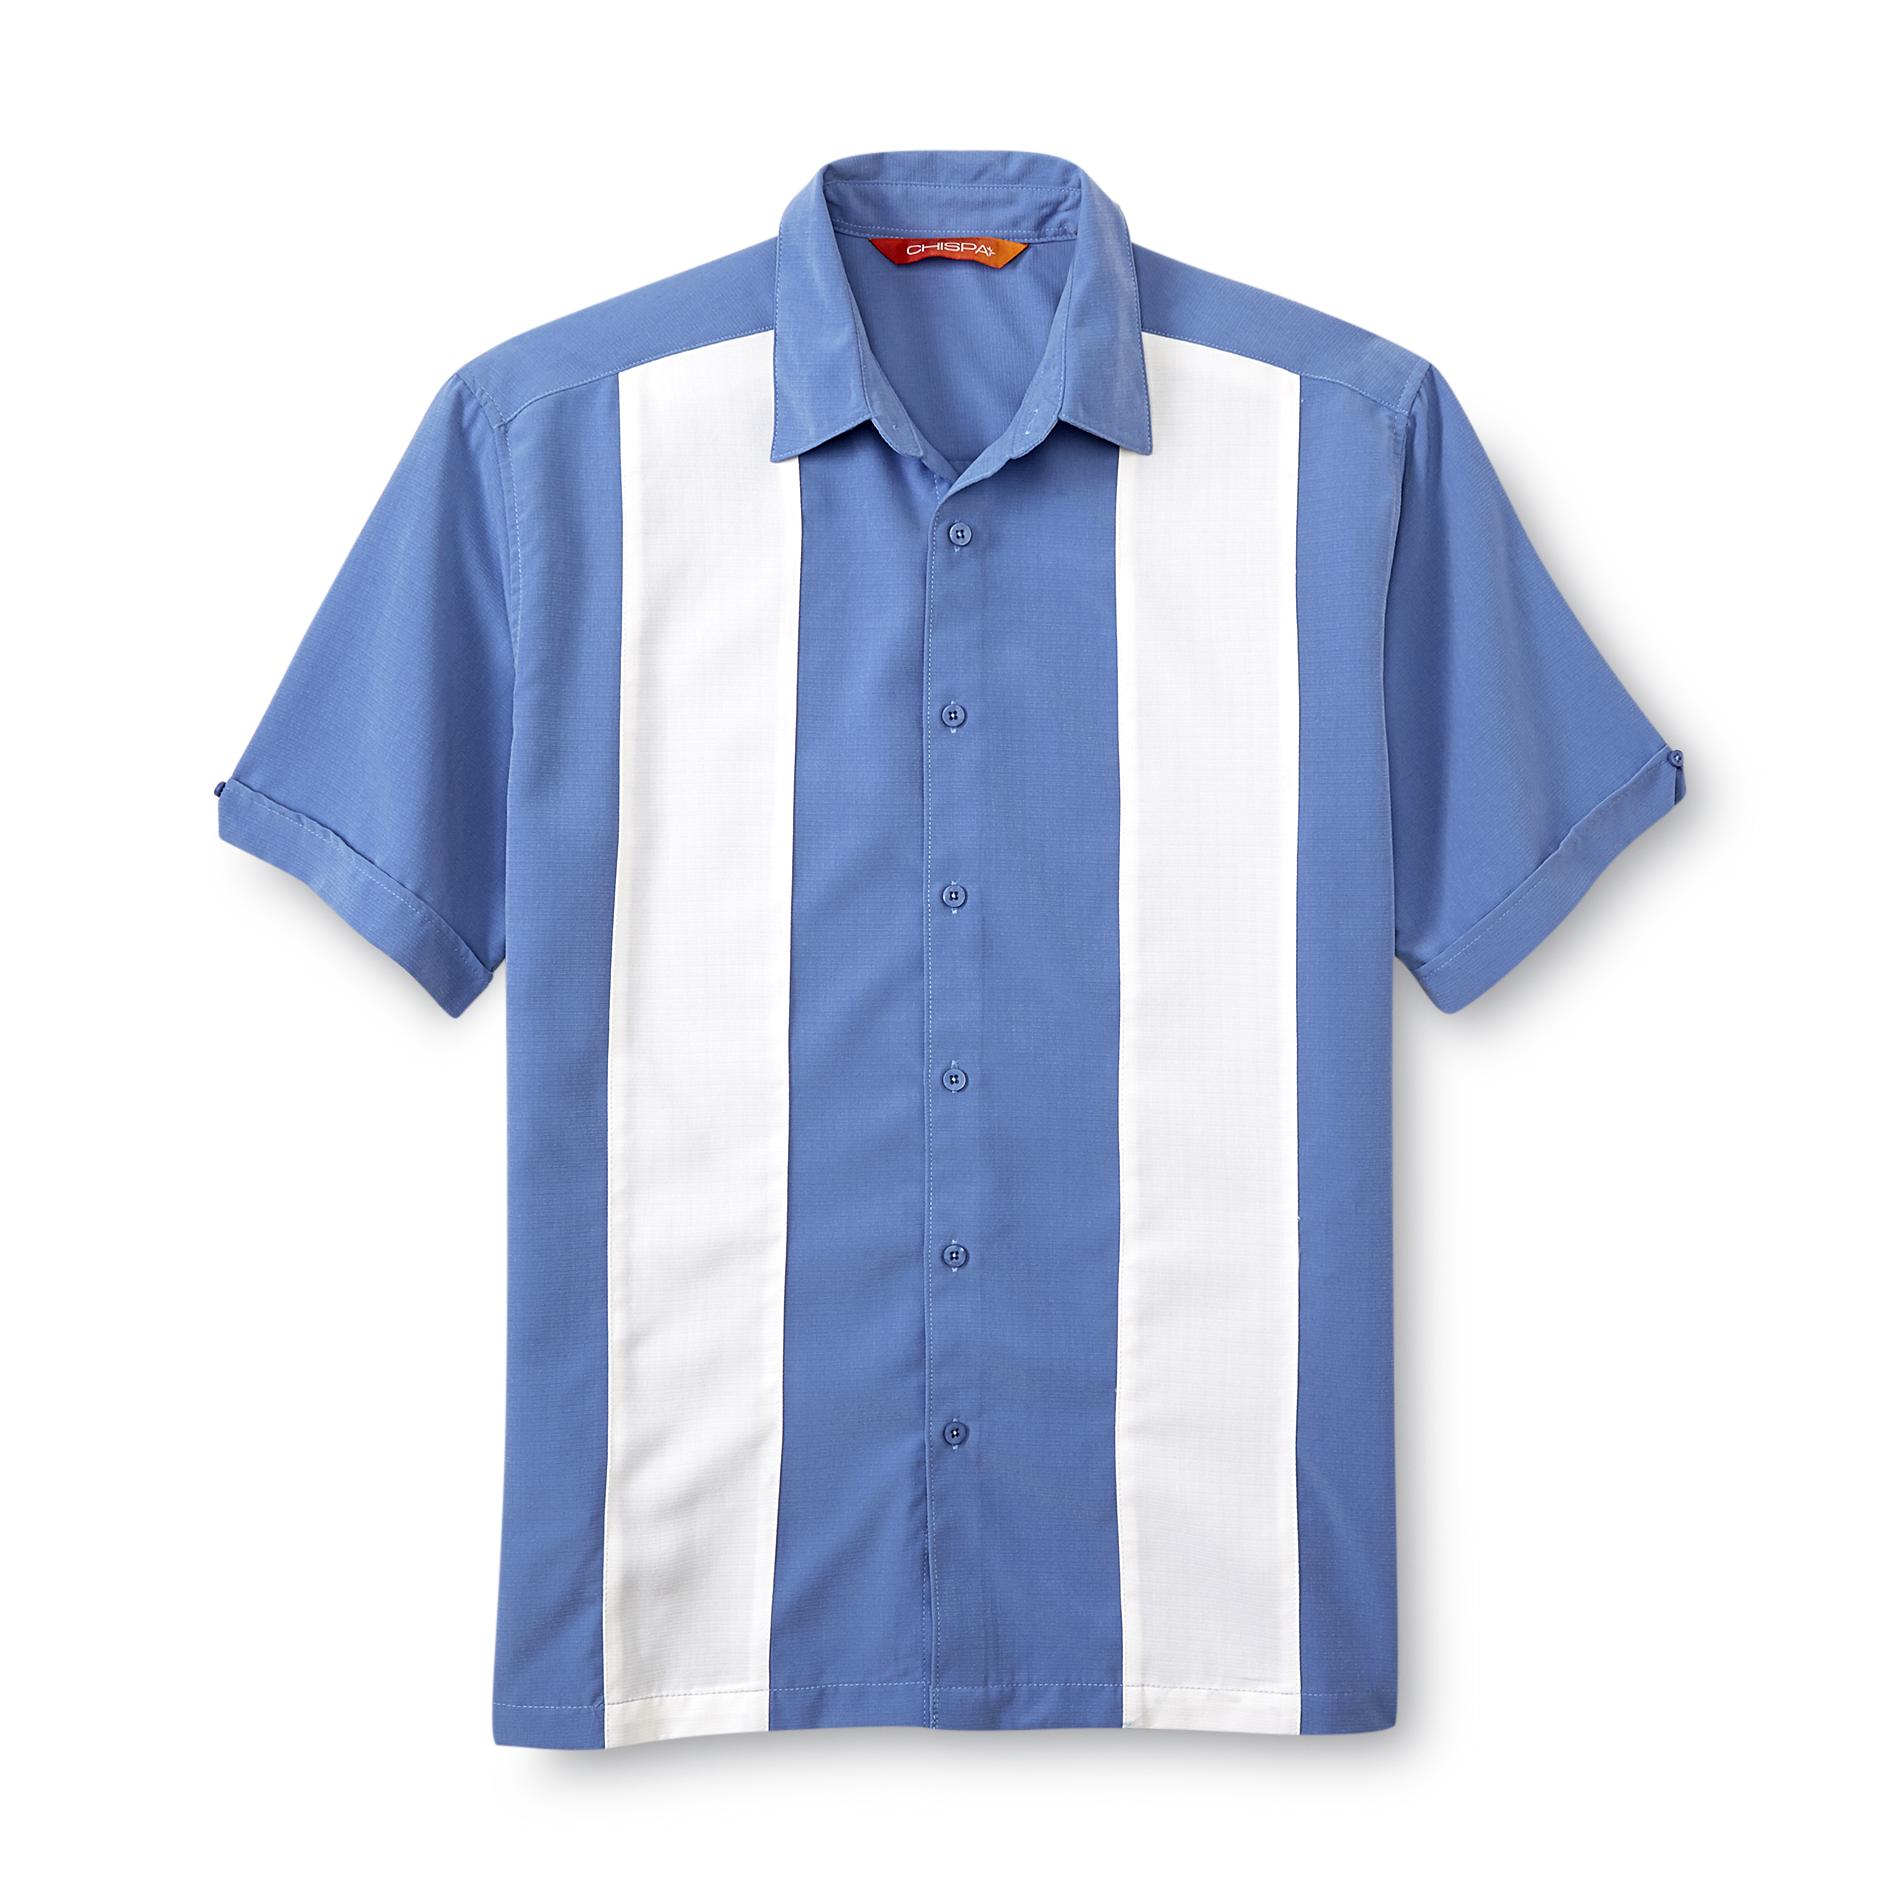 Chispa Men's Sport Shirt - Colorblock